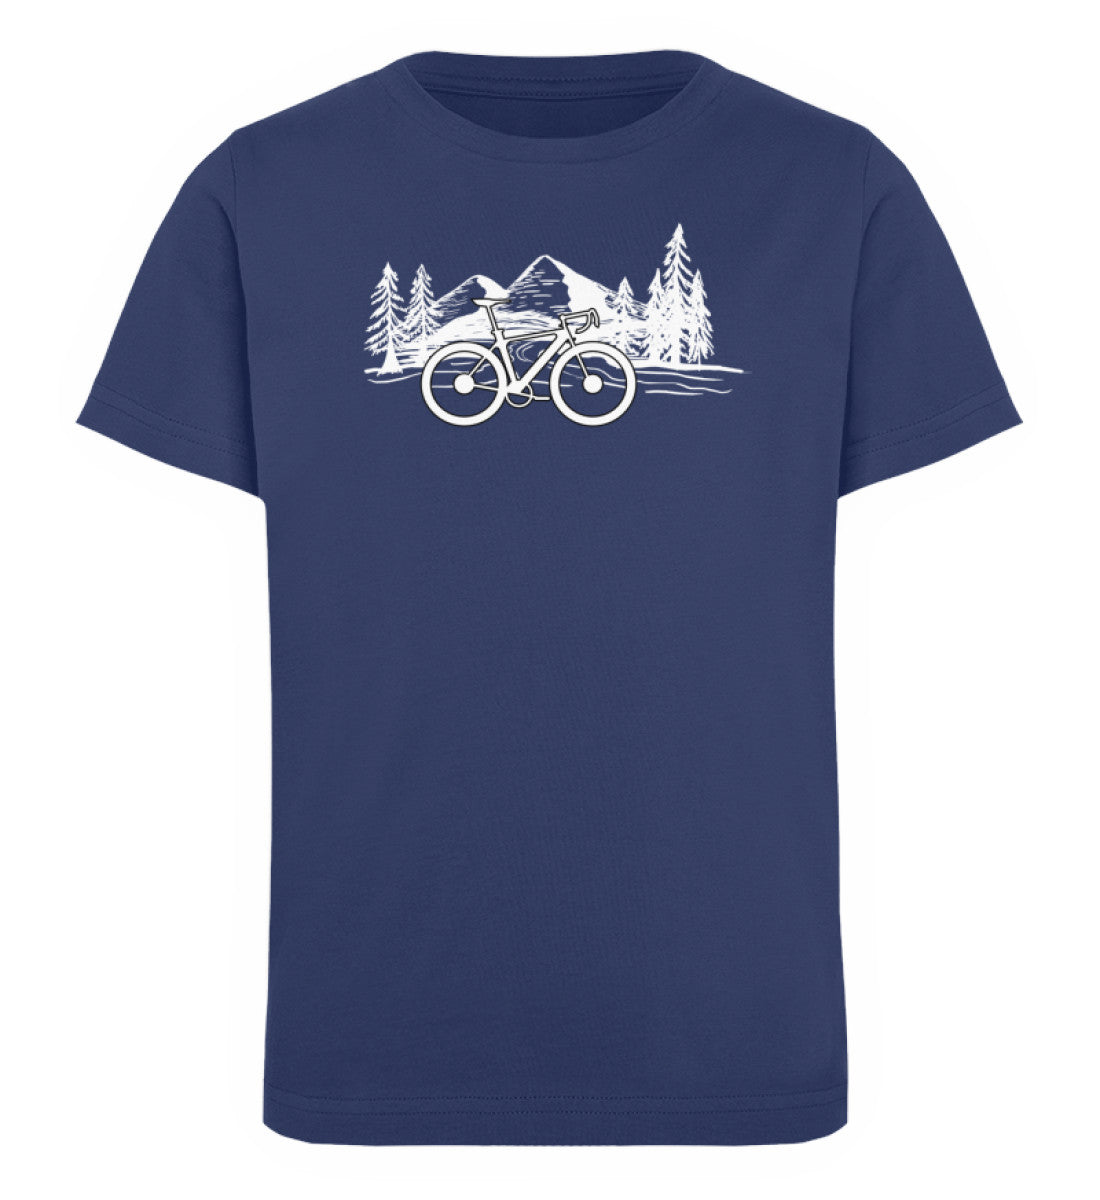 Fahrrad und Berge - Kinder Premium Organic T-Shirt fahrrad mountainbike Navyblau